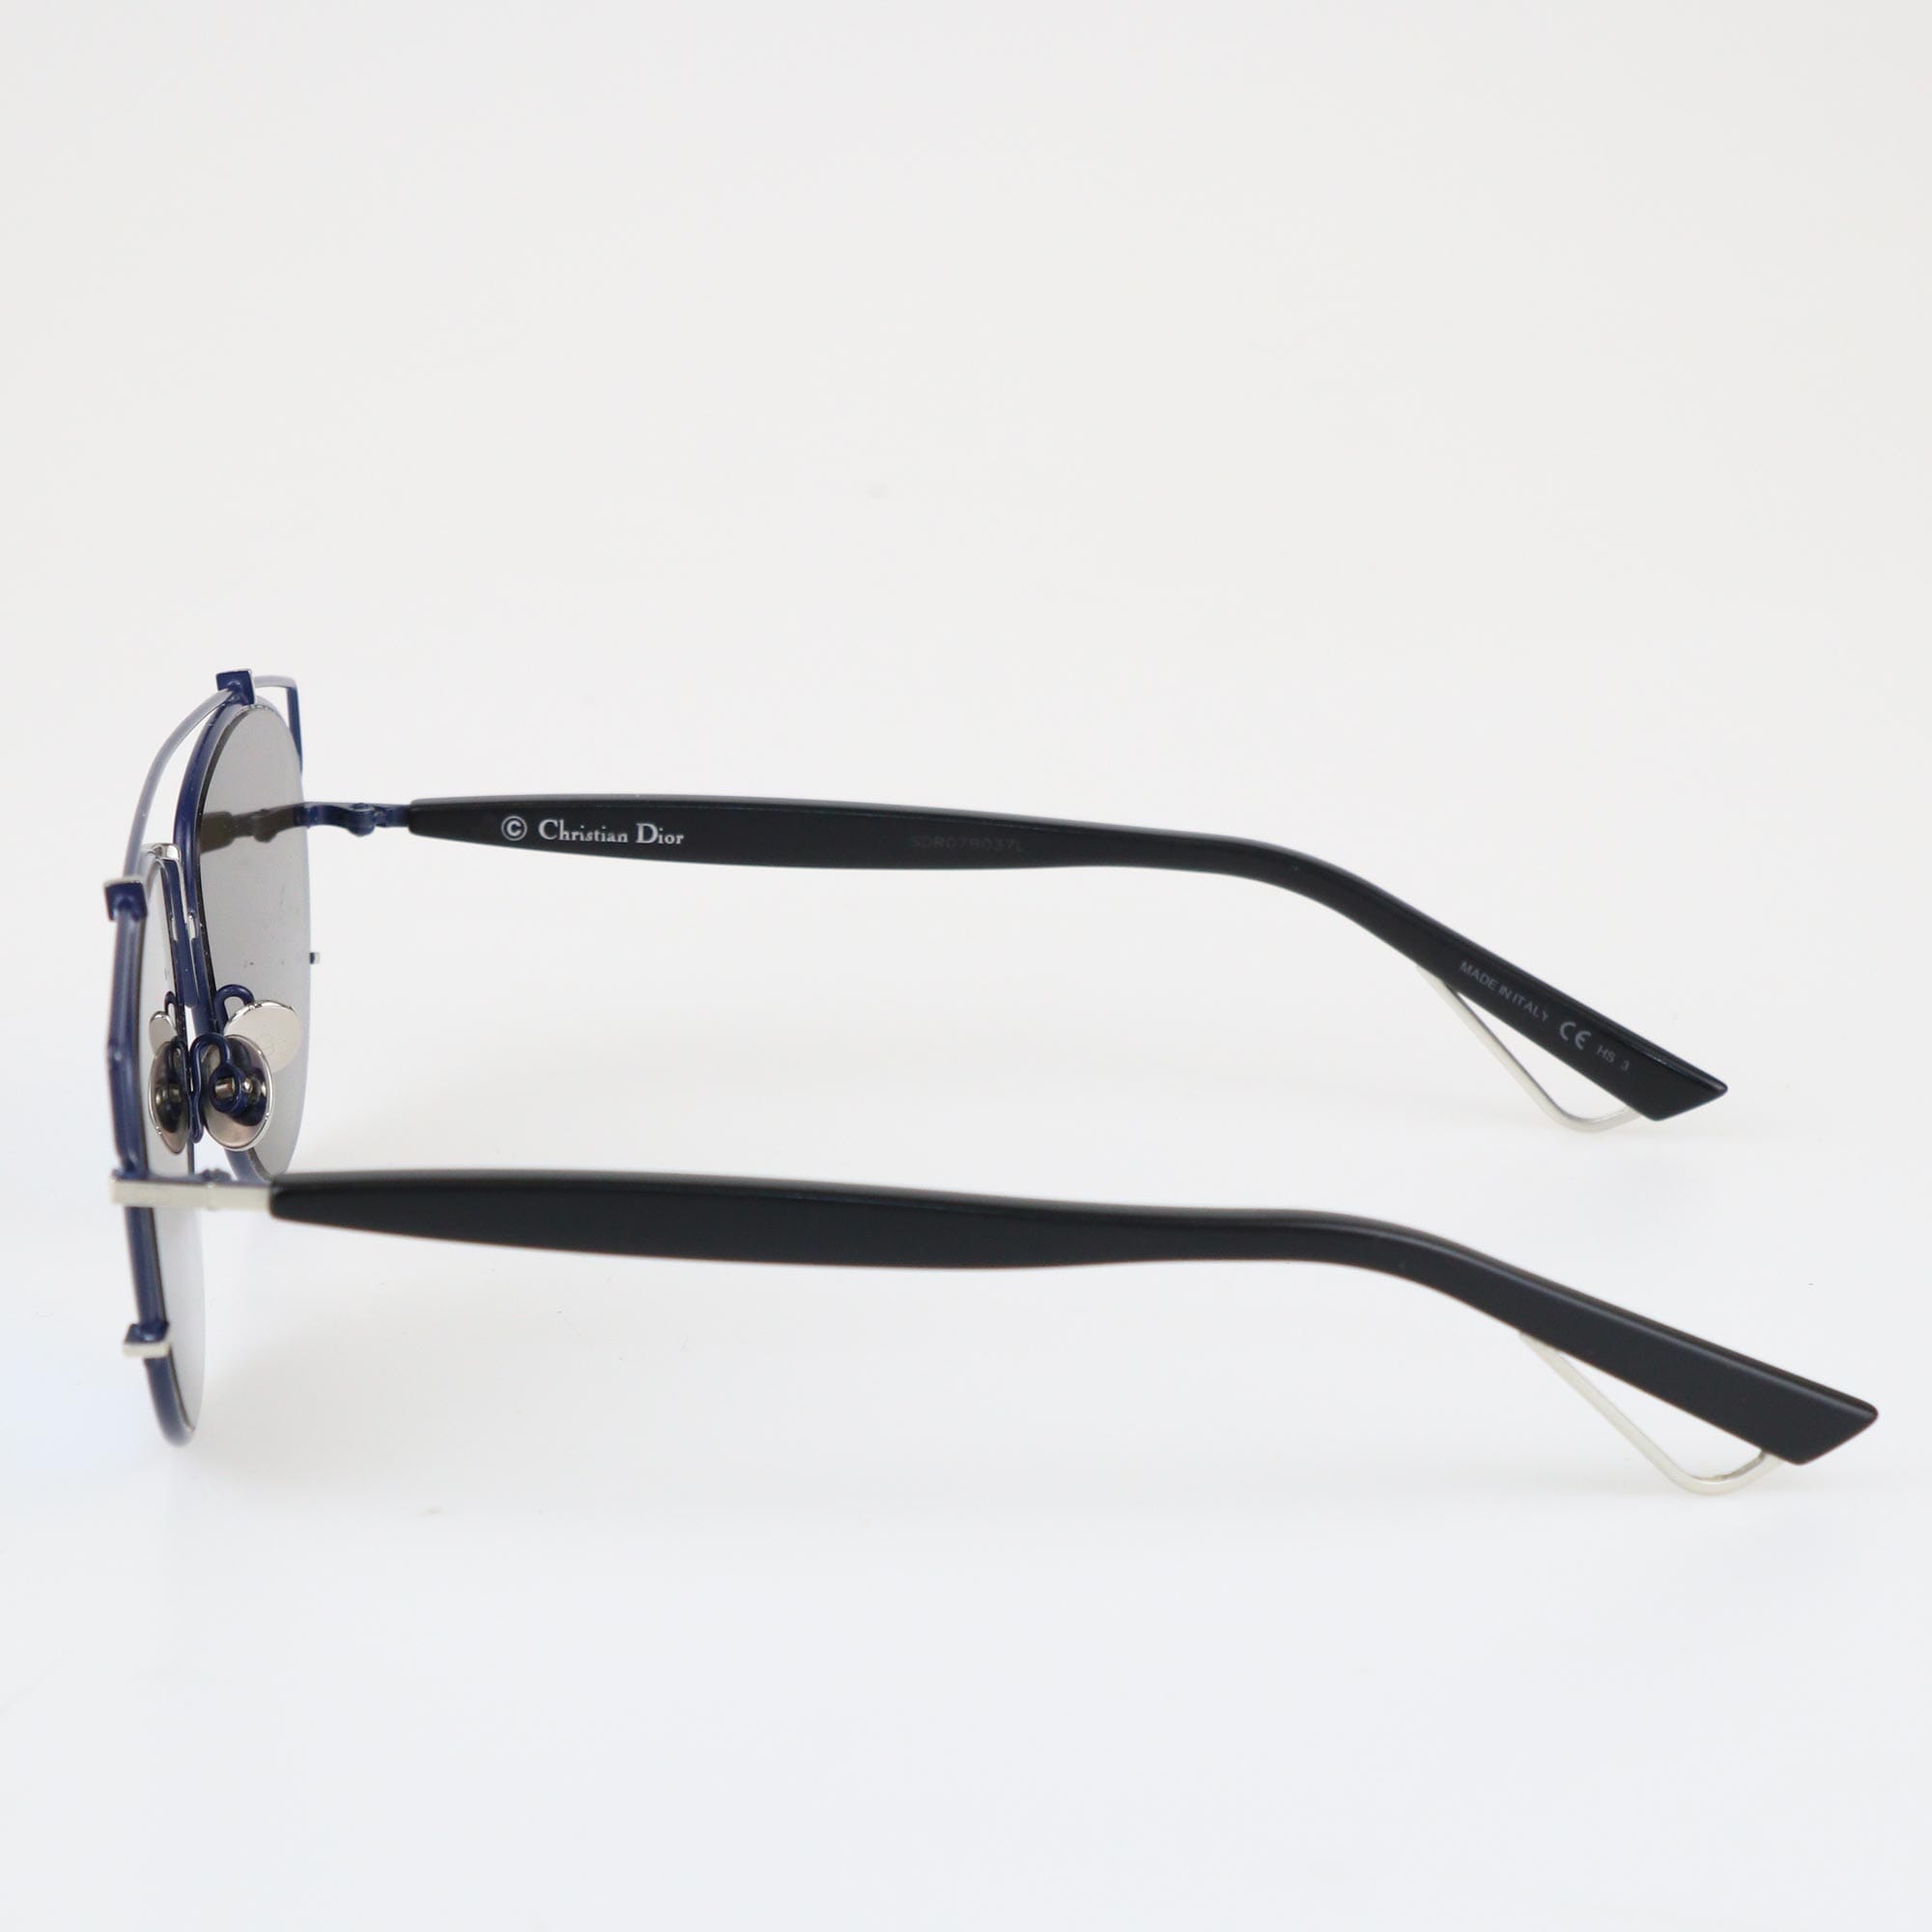 Blue & Black Technologic Cut Out Aviator Sunglasses Sunglasses Dior 